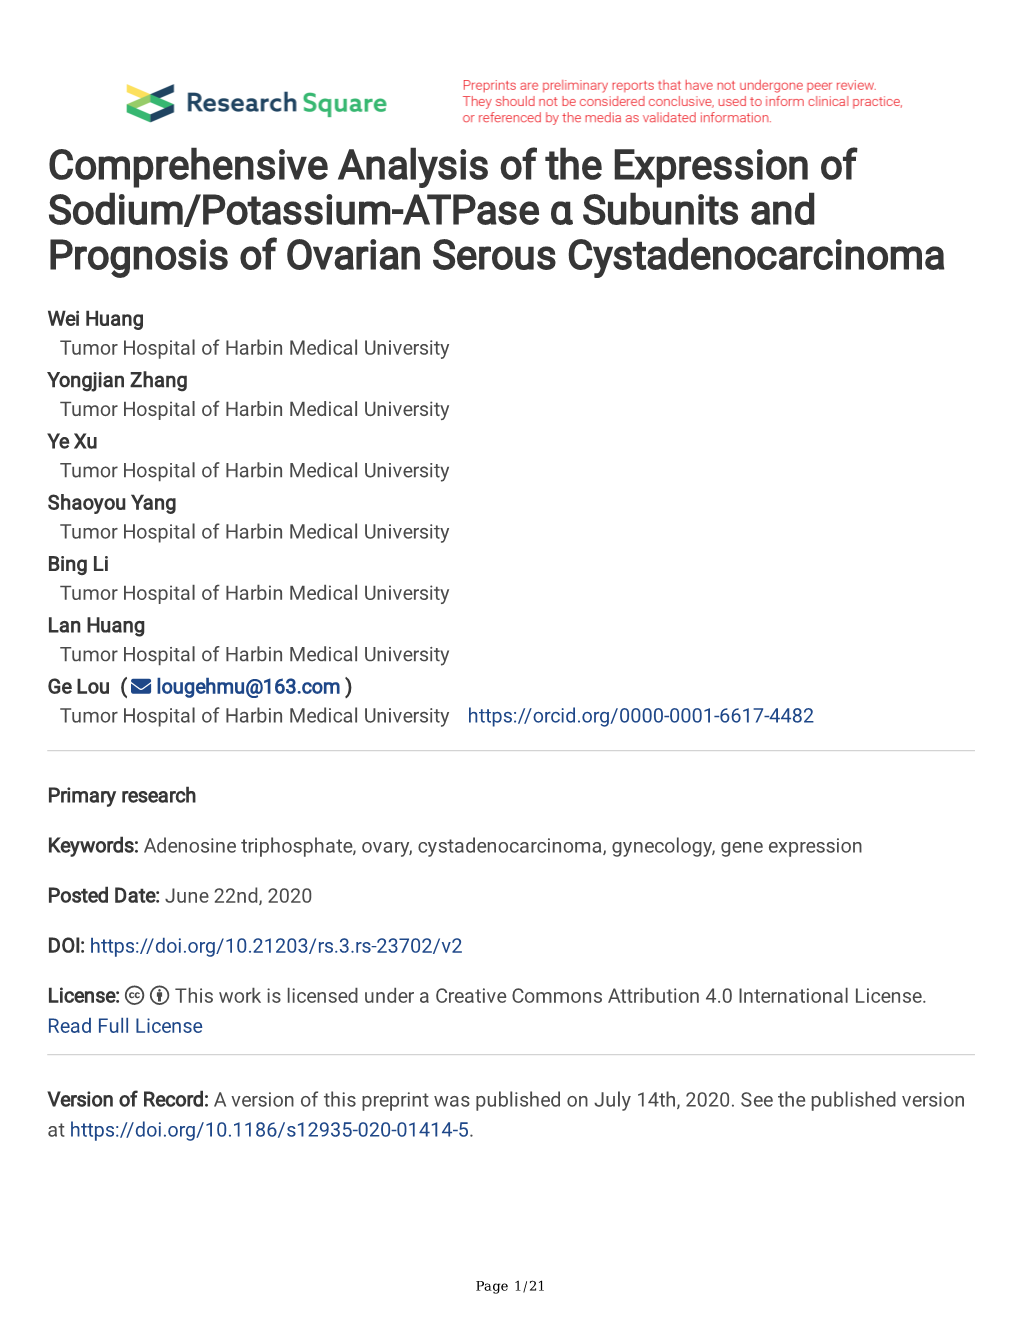 Comprehensive Analysis of the Expression of Sodium/Potassium-Atpase Α Subunits and Prognosis of Ovarian Serous Cystadenocarcinoma